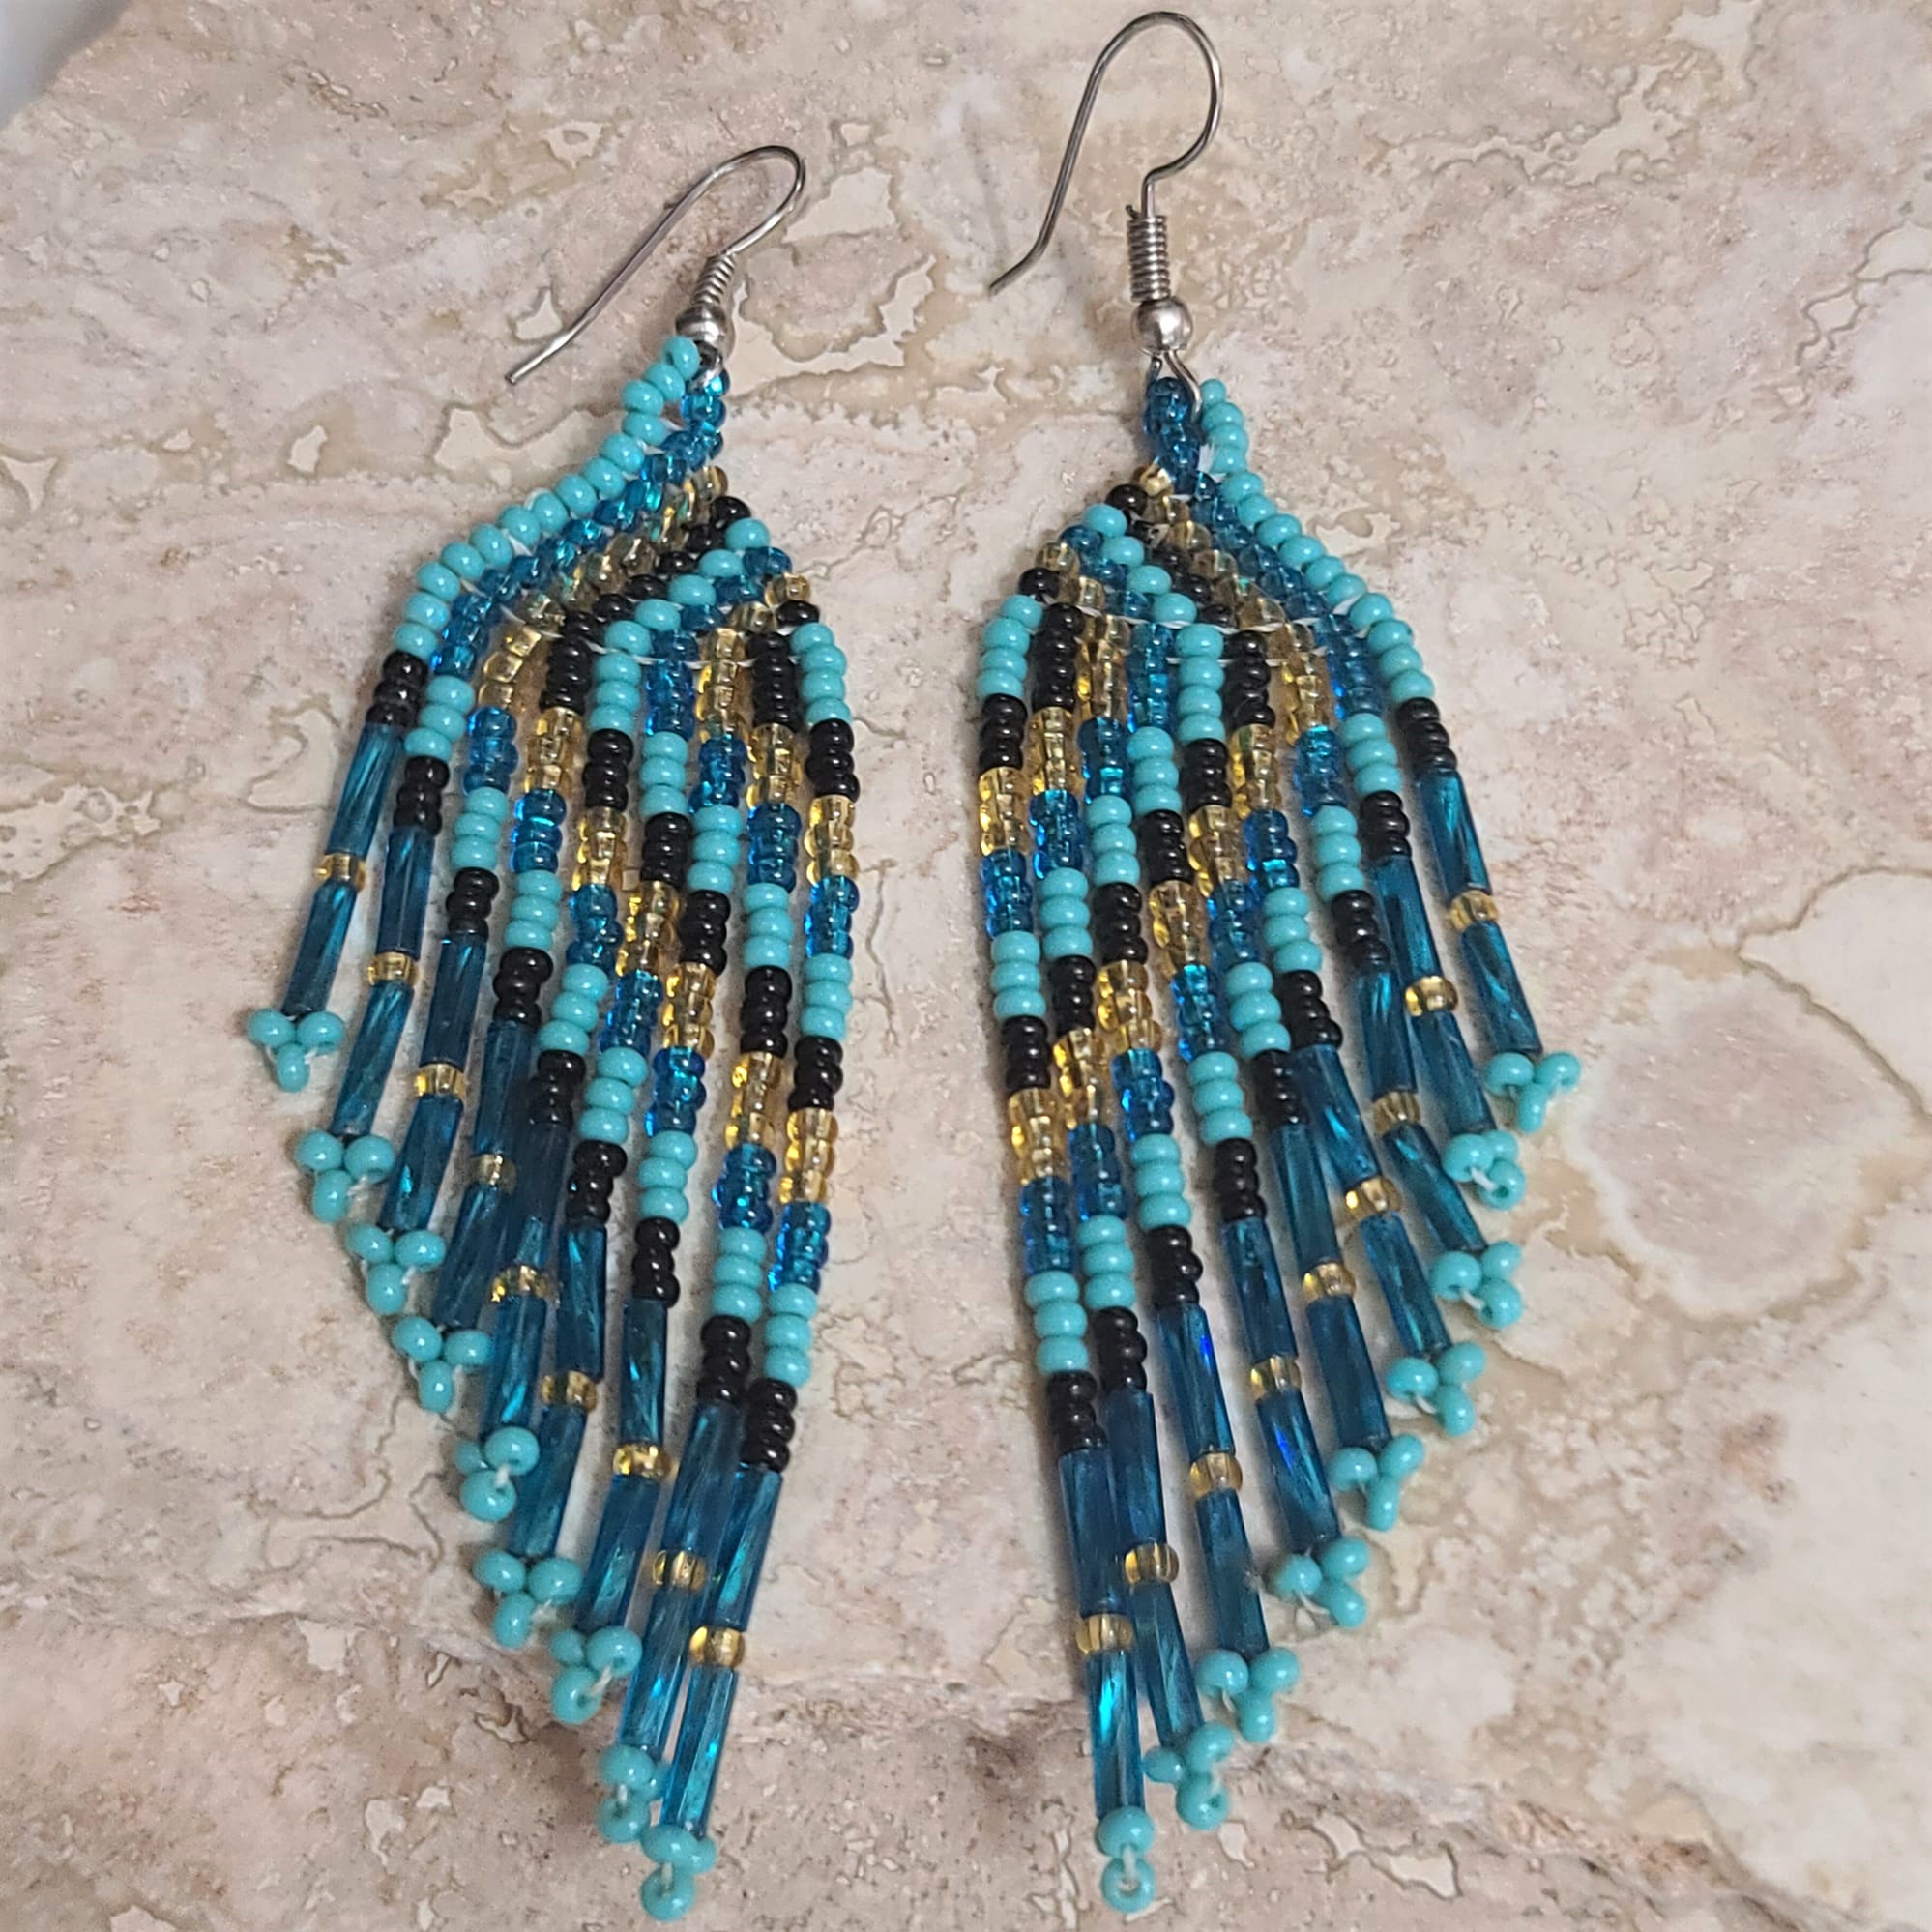 Handmade Seed Bead Earrings, Turquoise dangle earrings